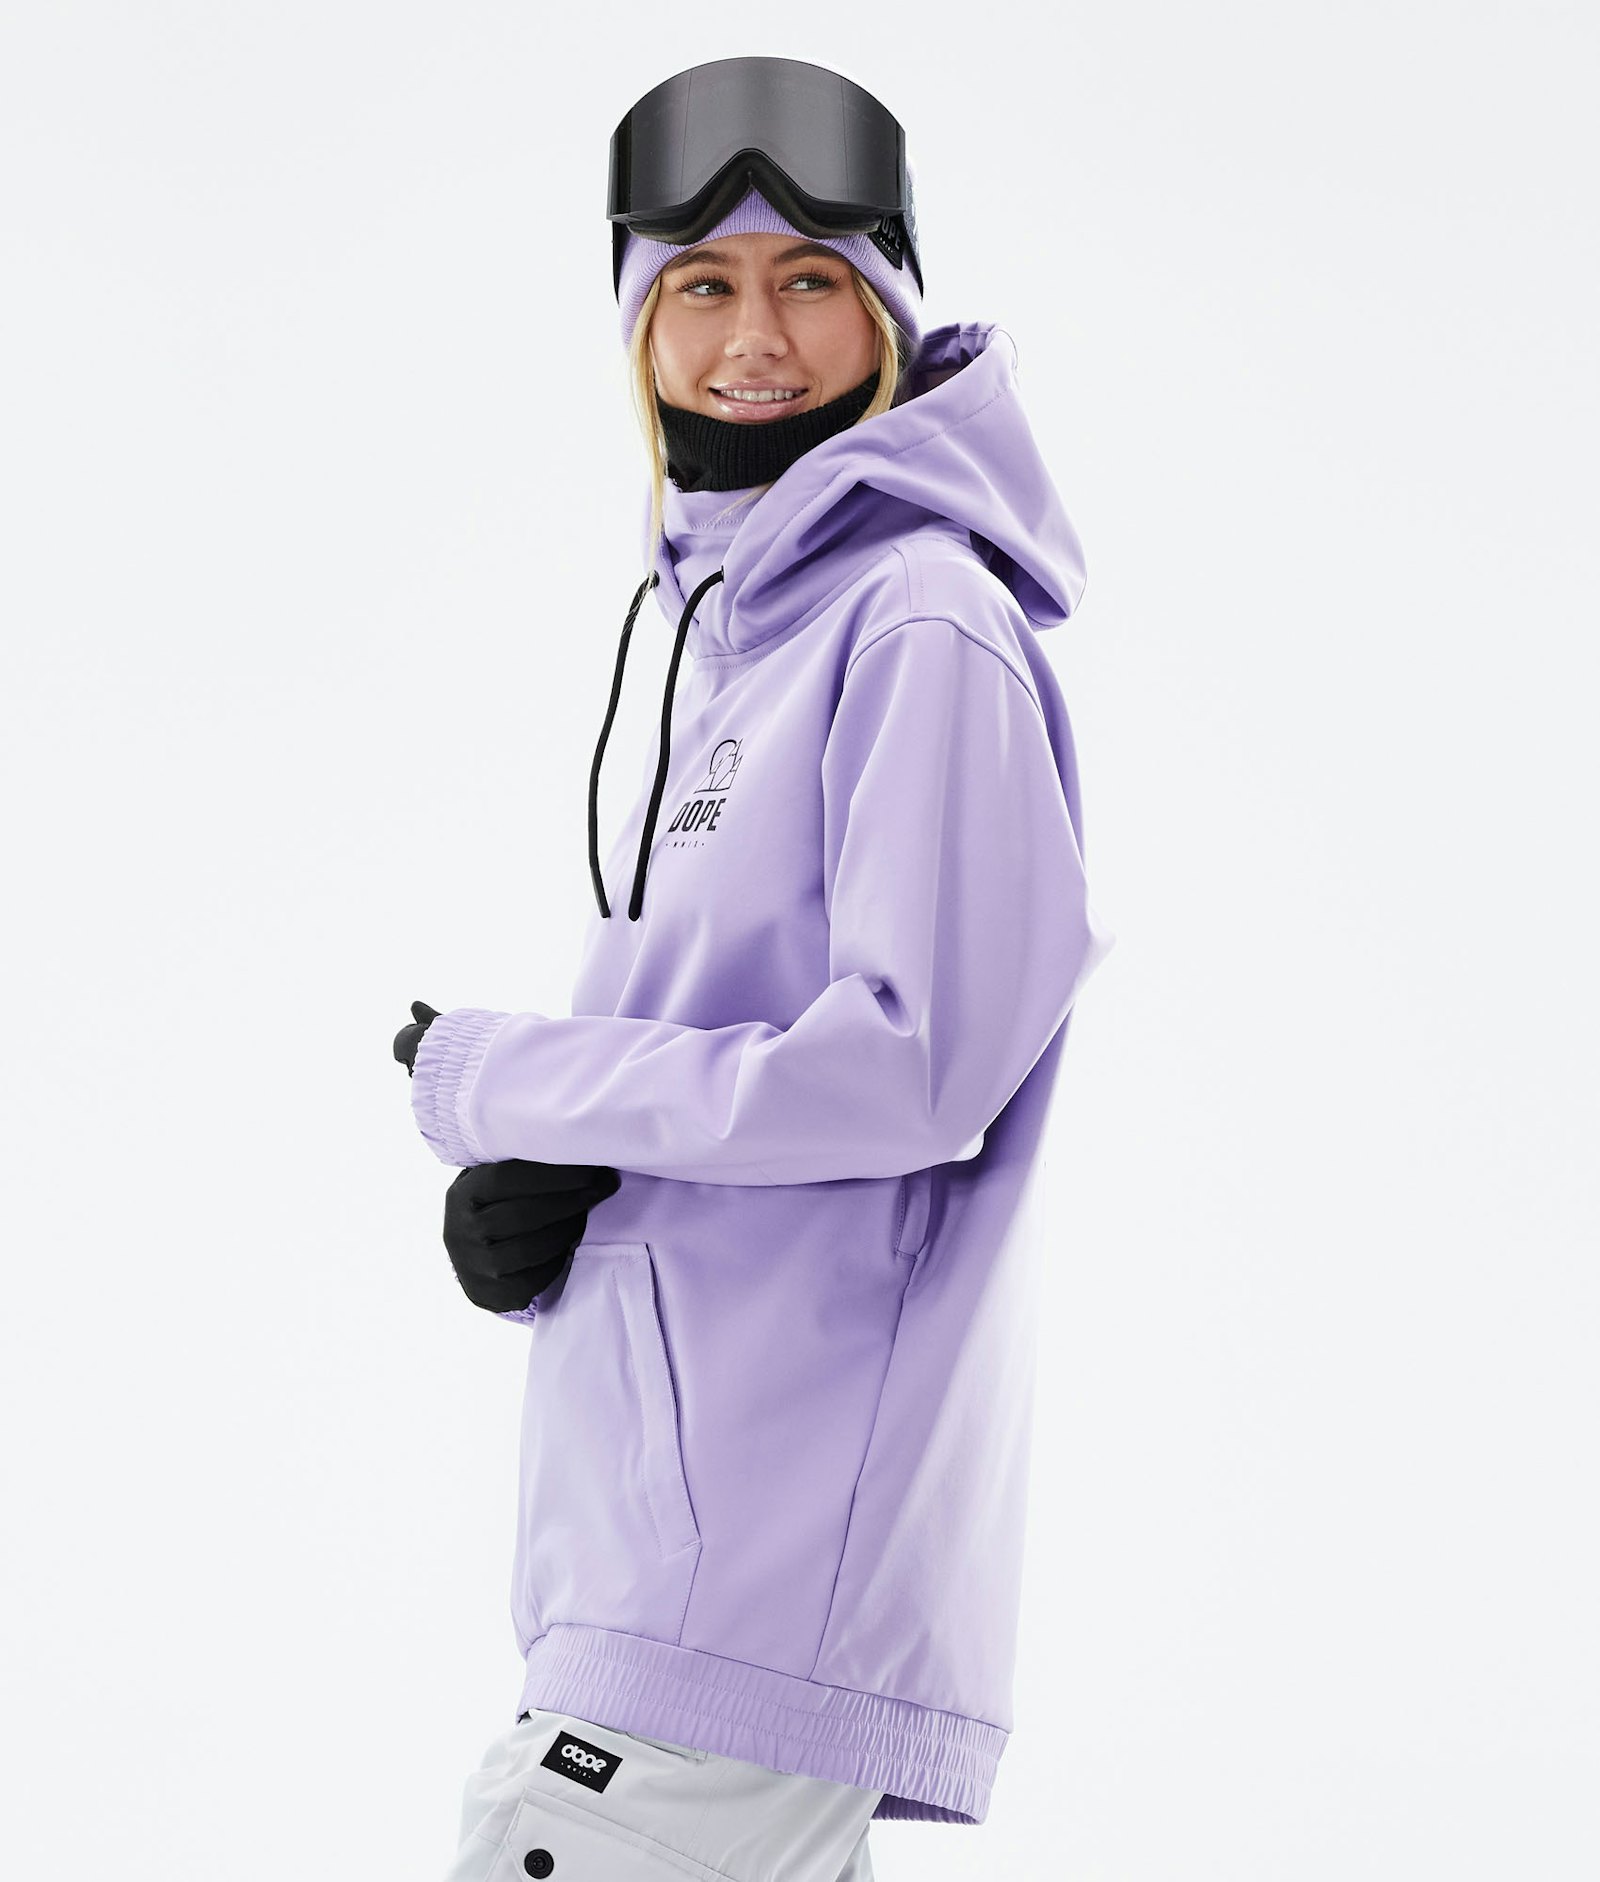 Yeti W 2021 Veste Snowboard Femme Rise Faded Violet